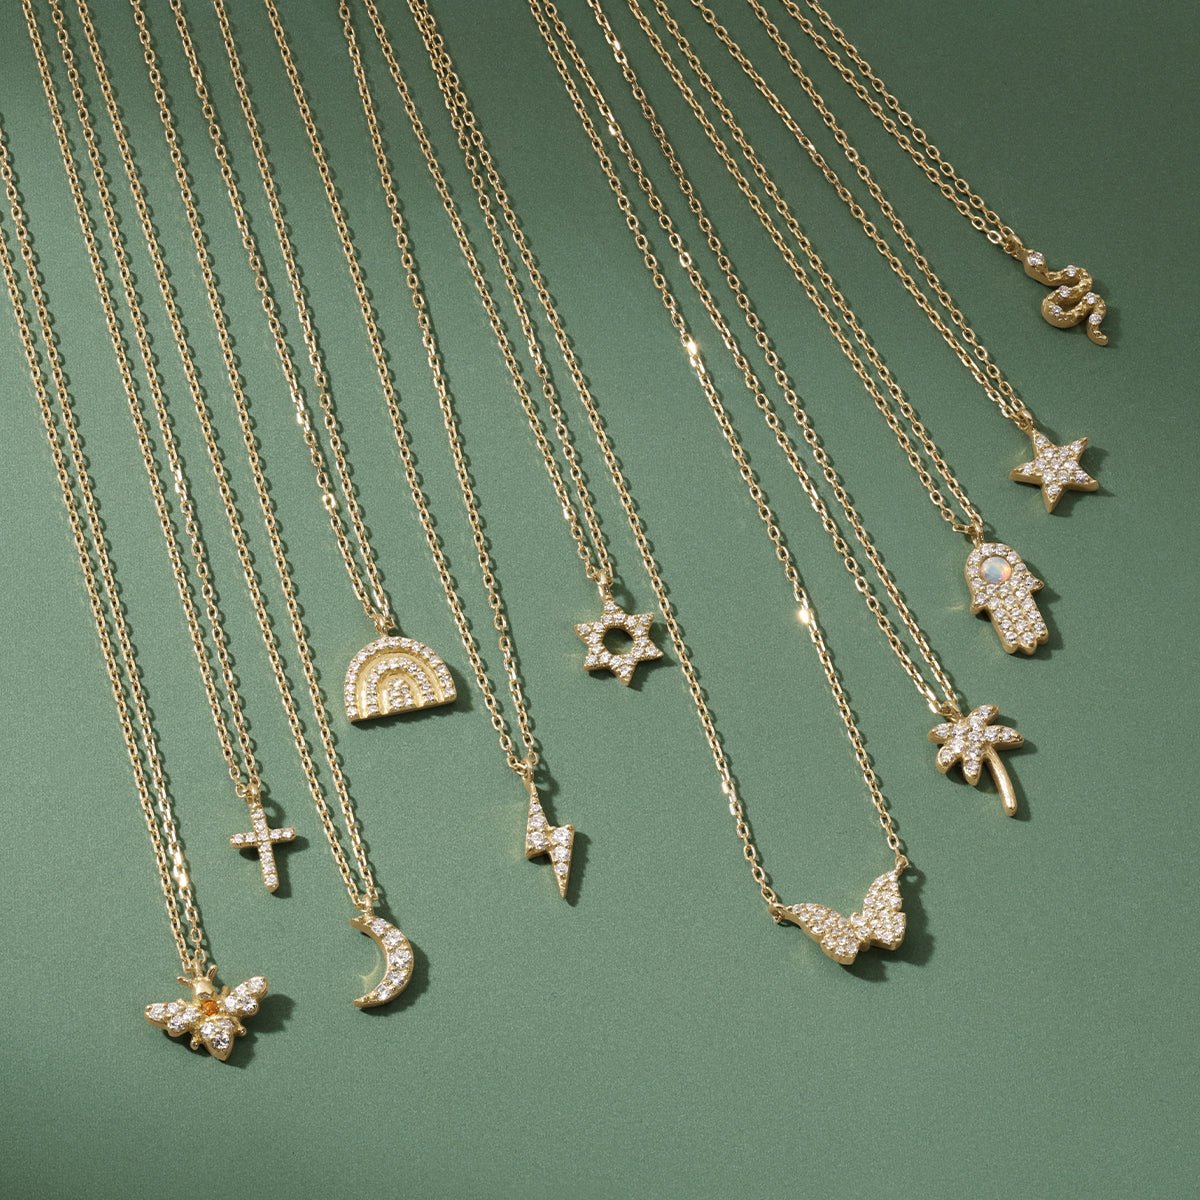 11 diamond charm necklaces. Shop New diamond charm necklaces. 